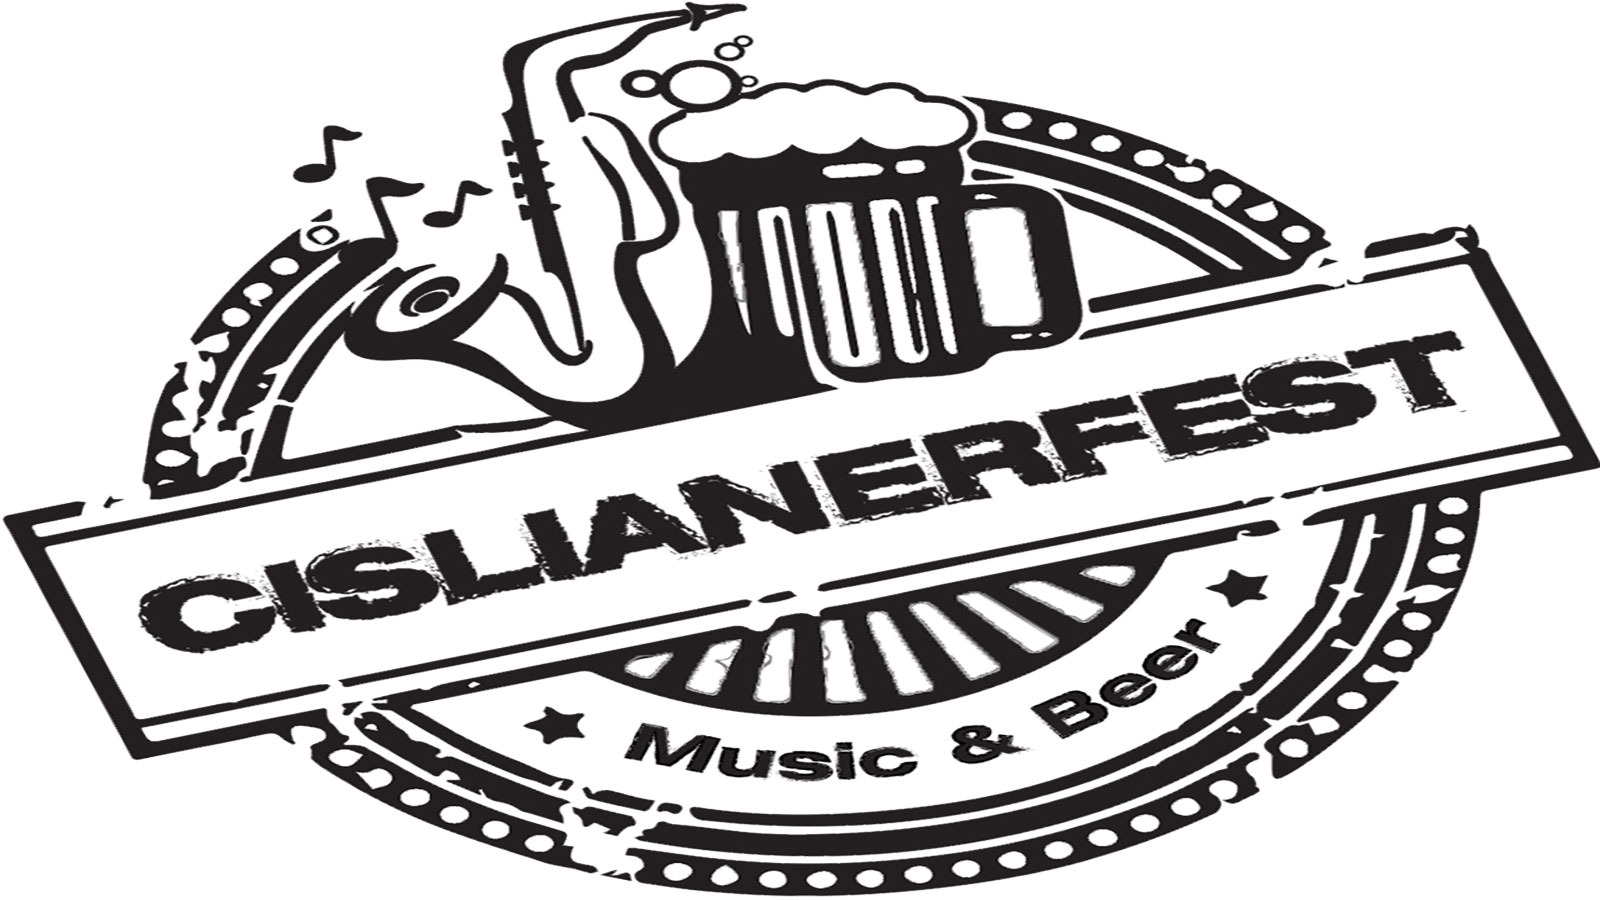 Il logo del contest musicale Cislianerfest.